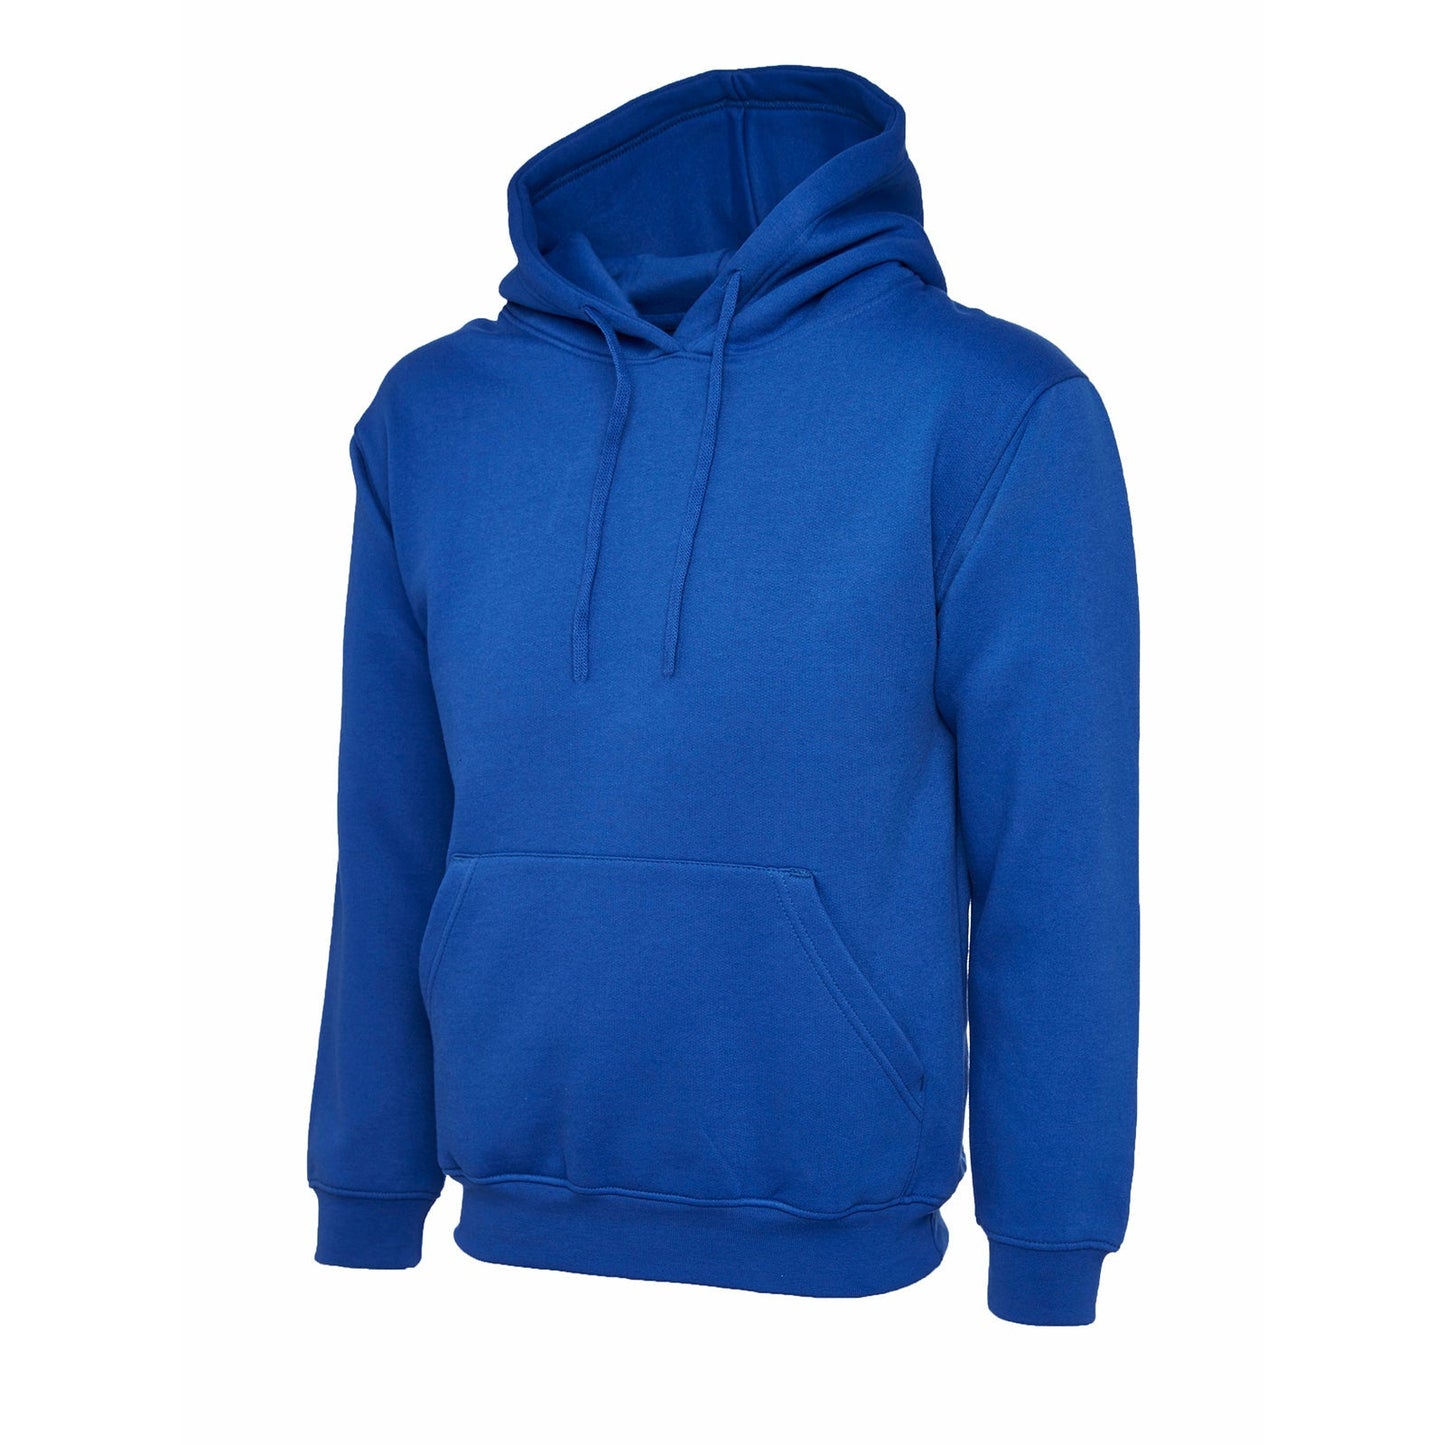 Olympic Hooded Sweatshirt Royal blue